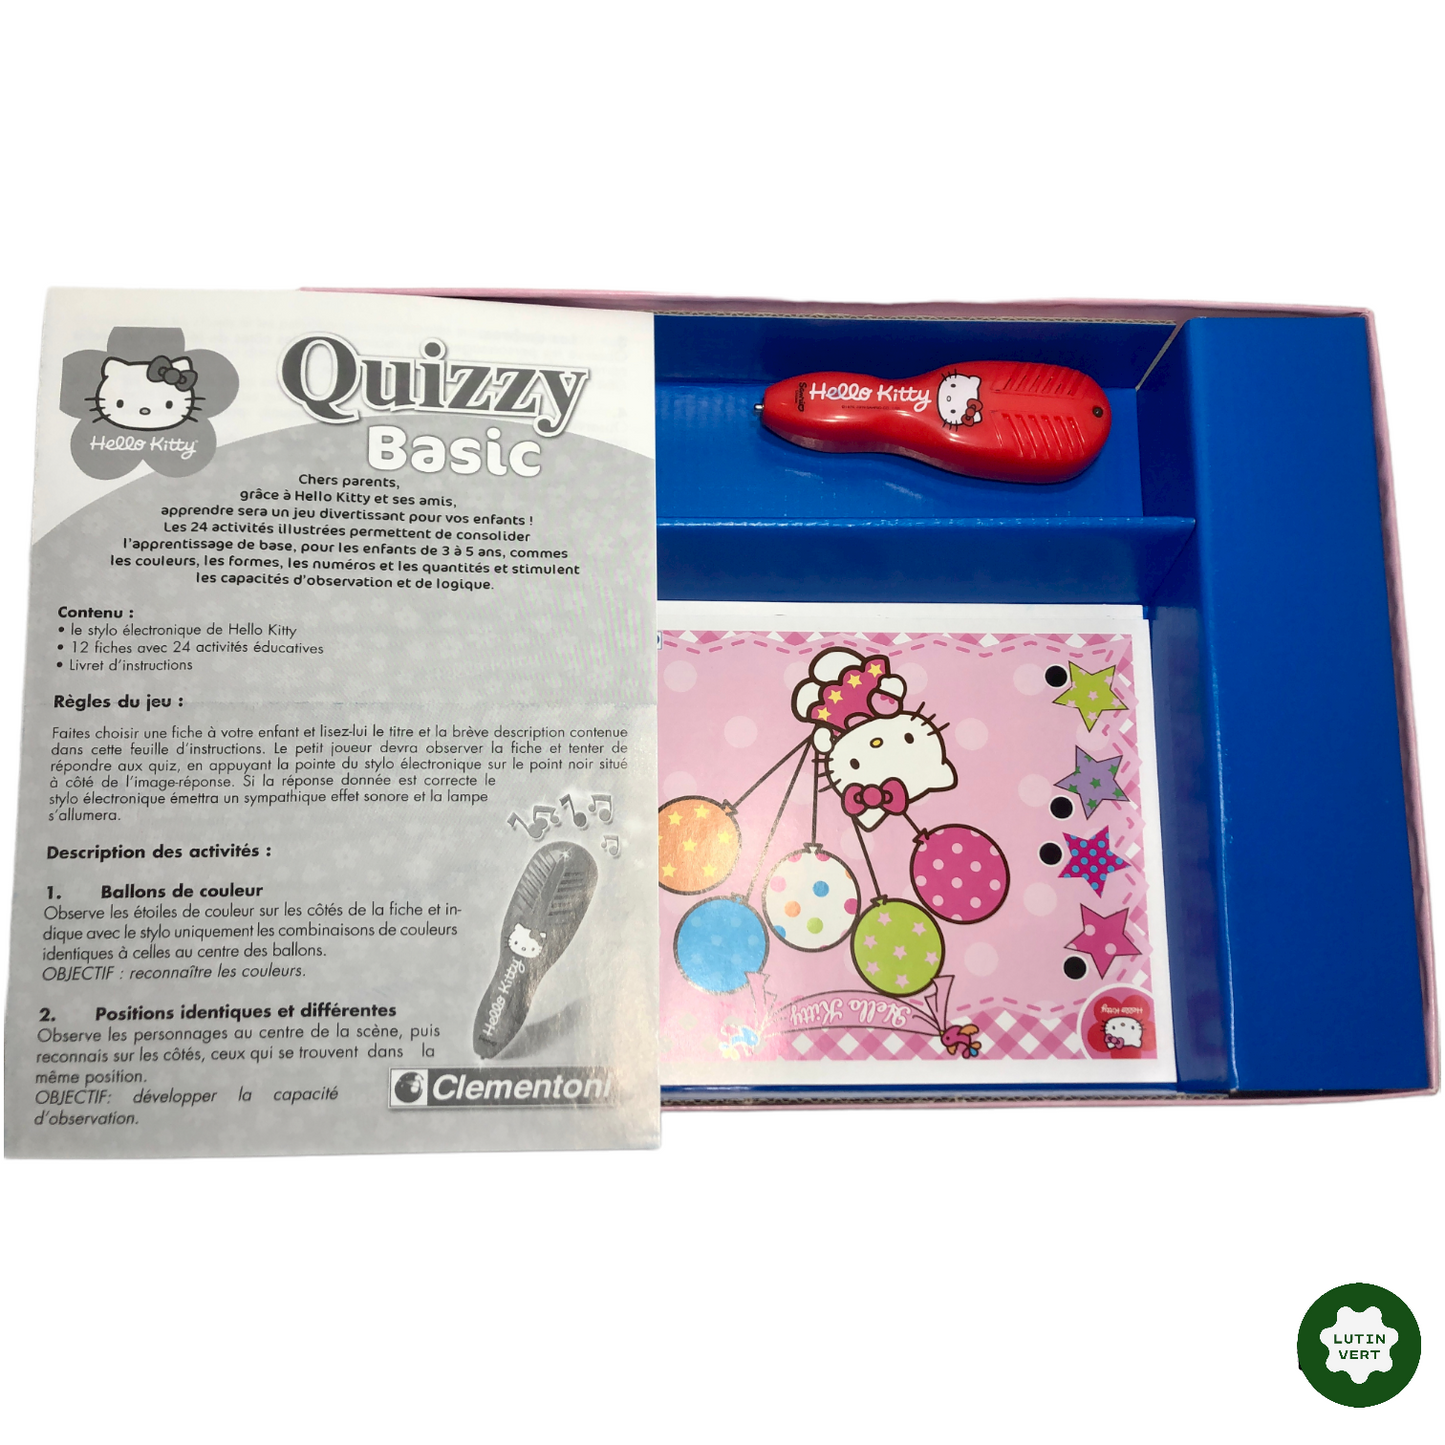 Quizzy Basic Hello Kitty occasion - Jeu éducatif interactif Clementoni